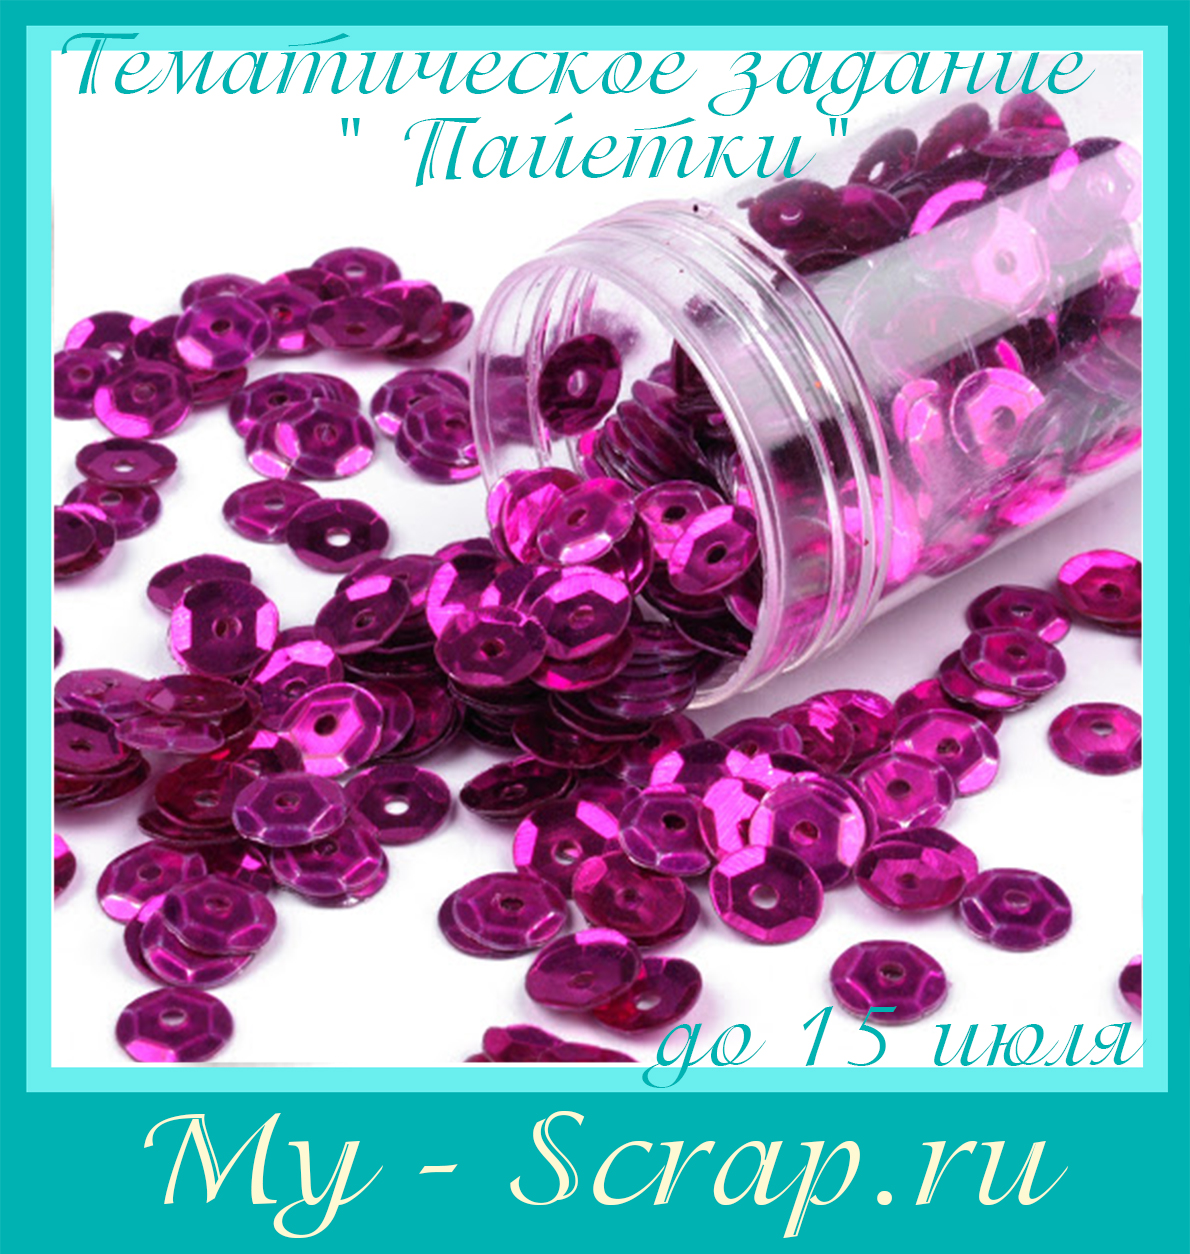 http://scrapulechki.blogspot.ru/2014/06/blog-post_20.html